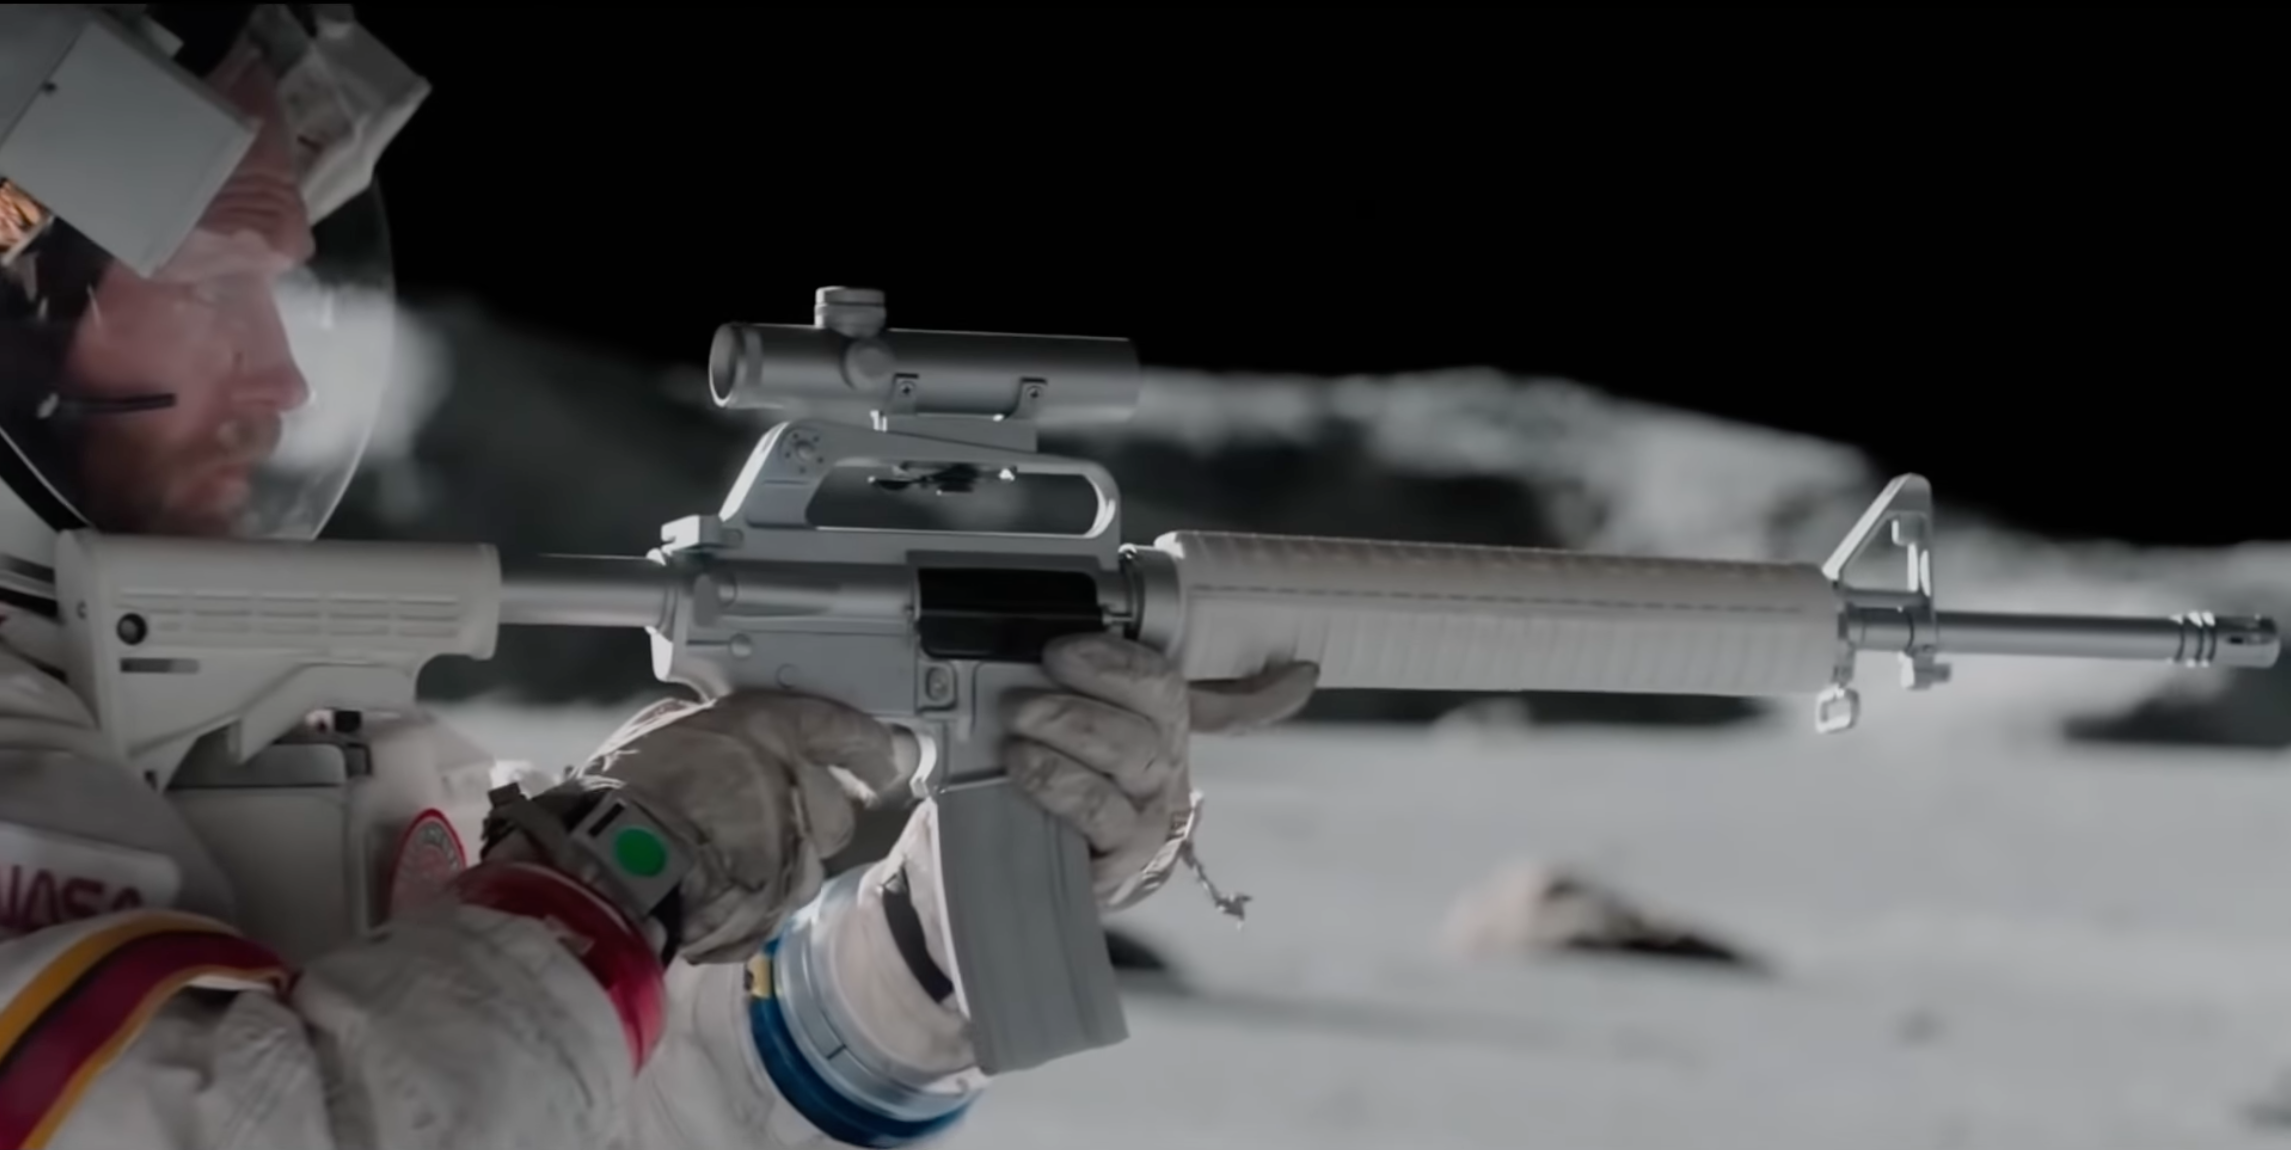 astronauts on the moon shooting guns